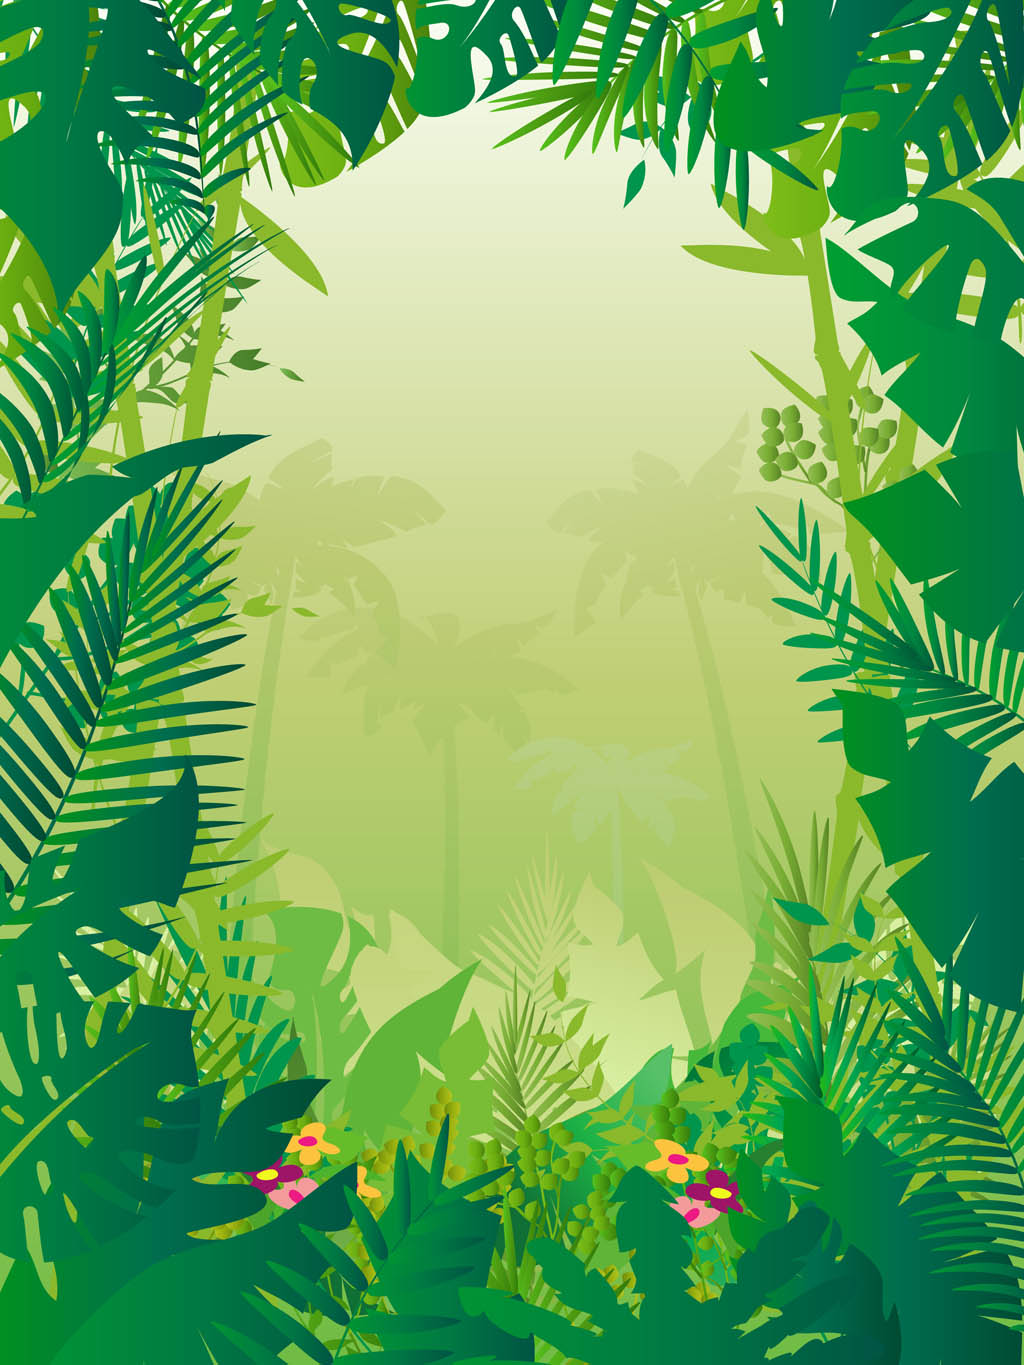 jungle background vector art graphics freevectorcom